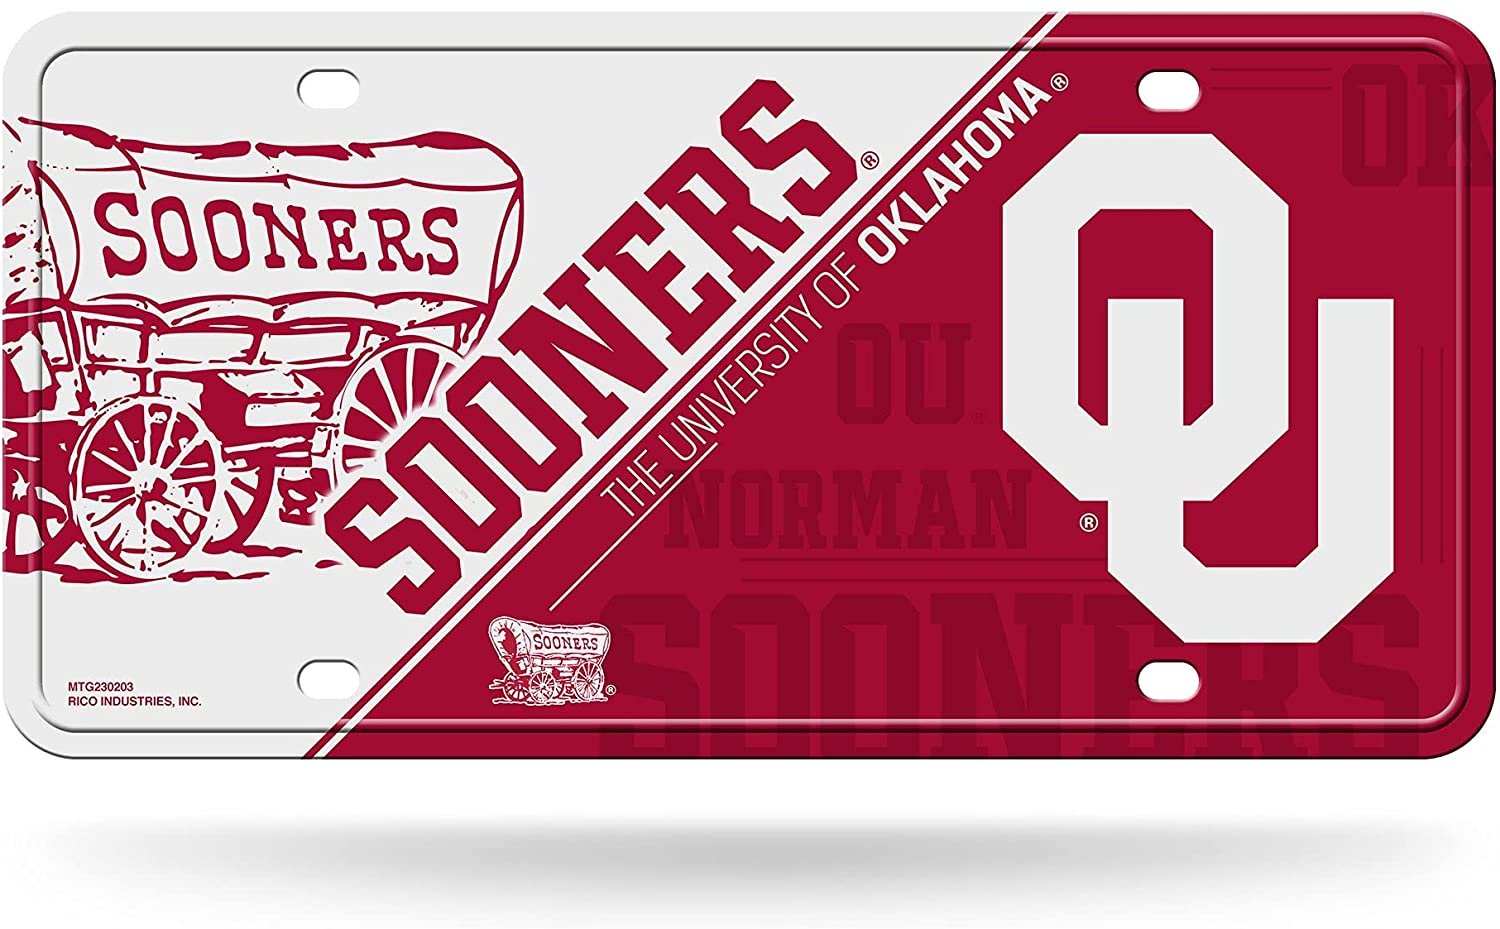 University of Oklahoma Sooners Metal Tag License Plate Novelty 6x12 Inch Split Design